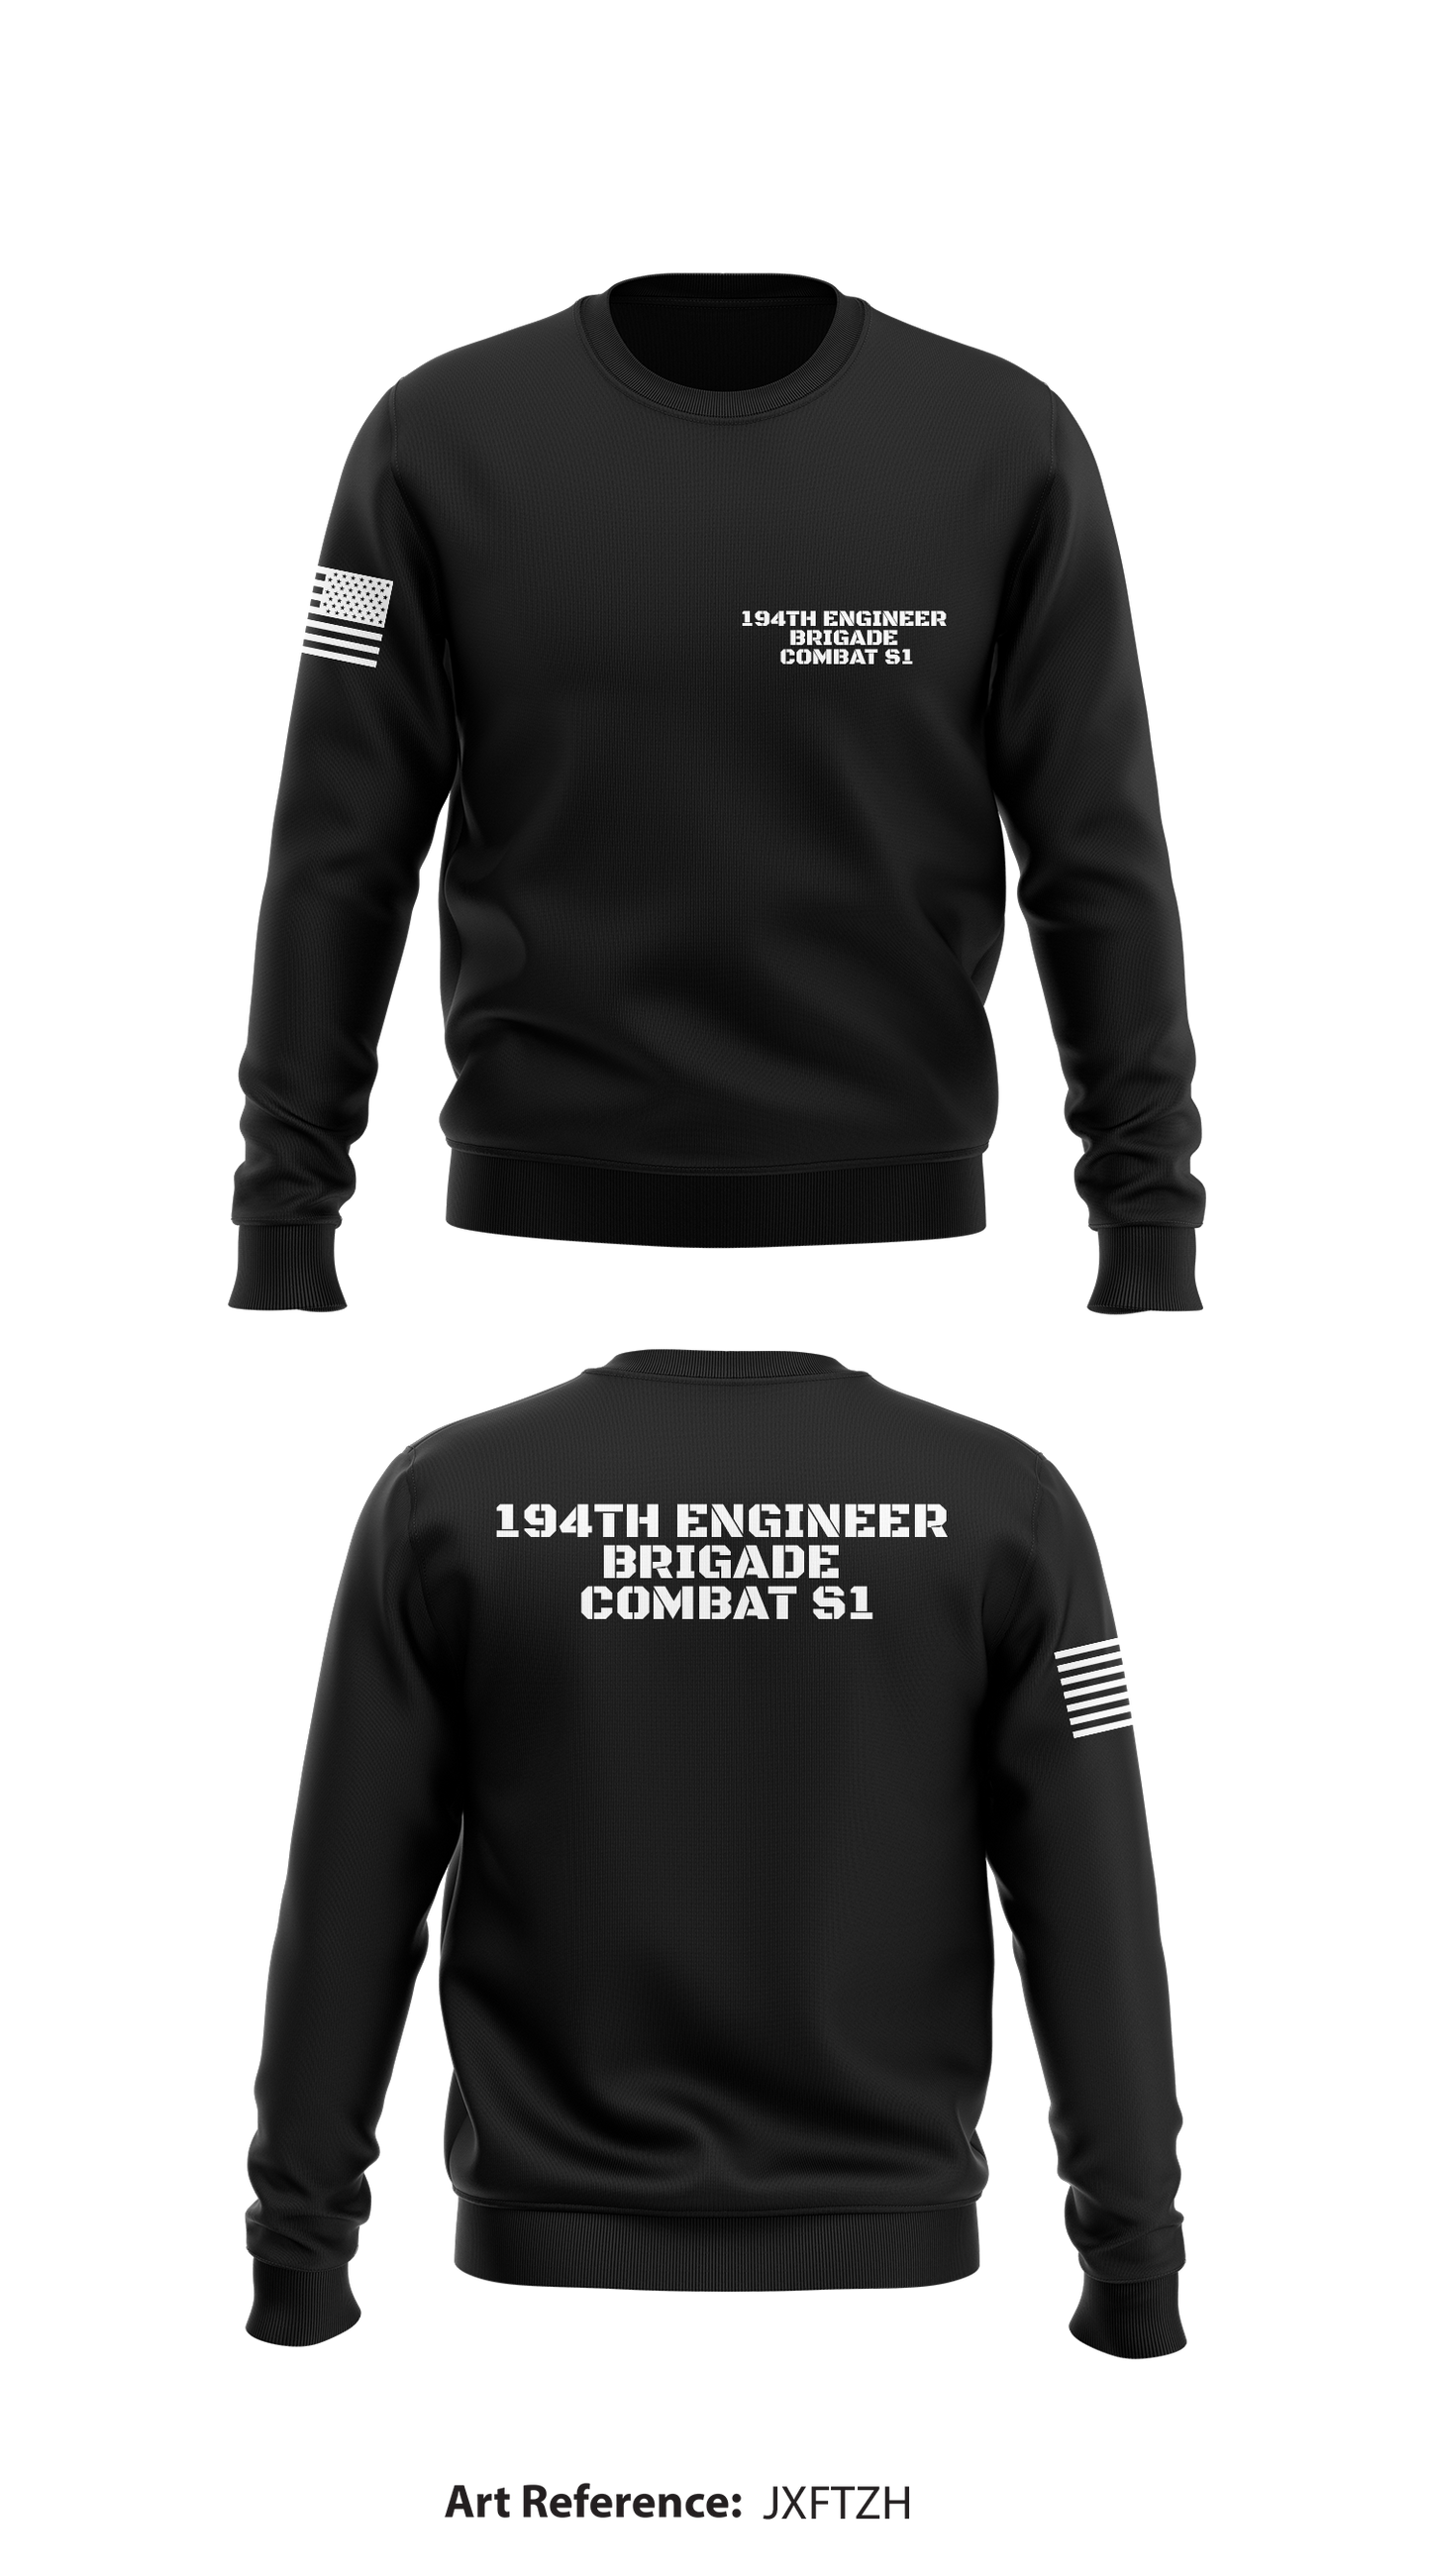 194TH ENGINEER BRIGADE COMBAT S1 Store 1 Core Men's Crewneck Performance Sweatshirt - JxFtzh